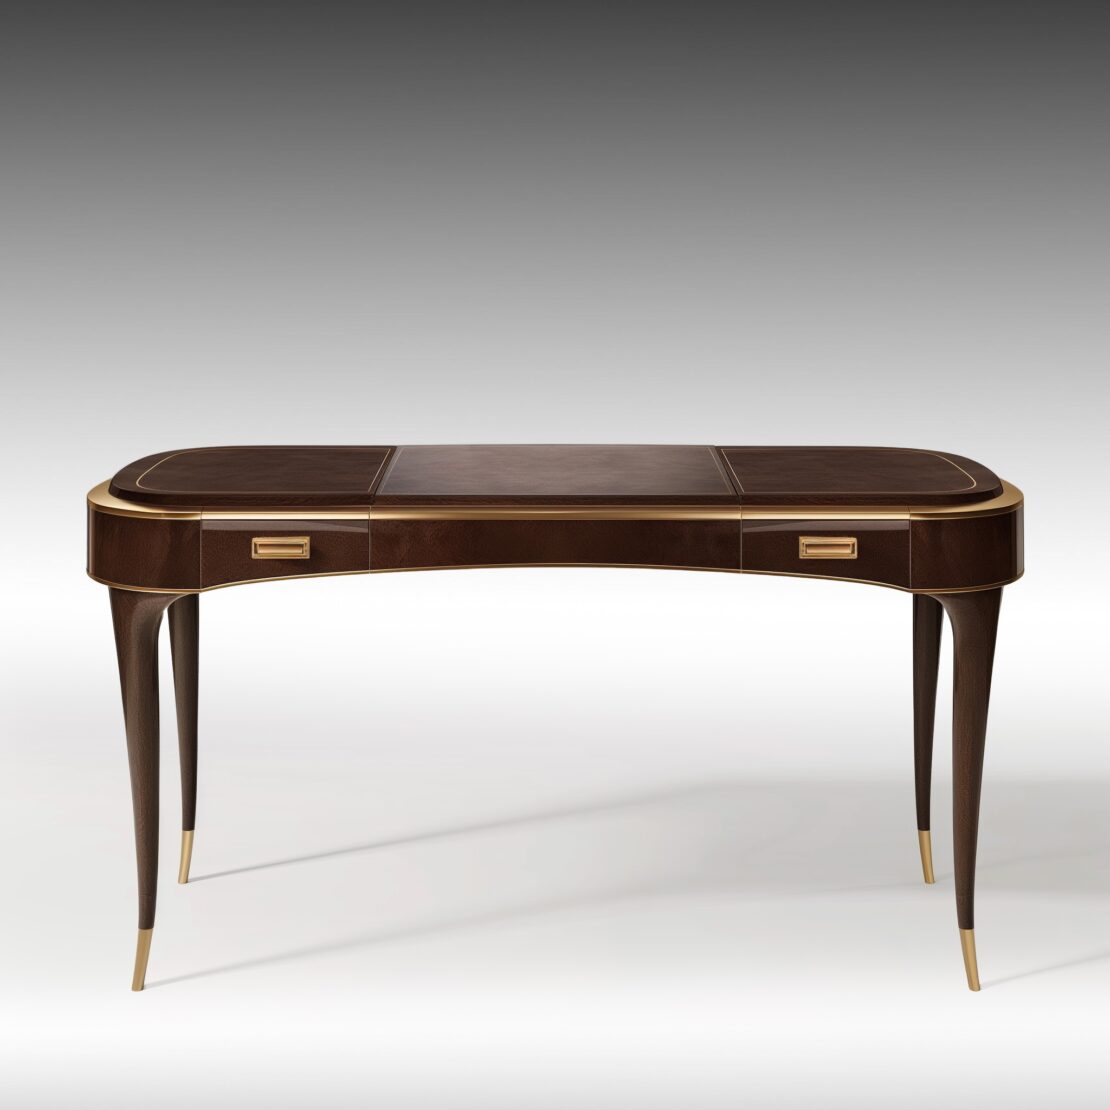 Luxury desk designed using ai